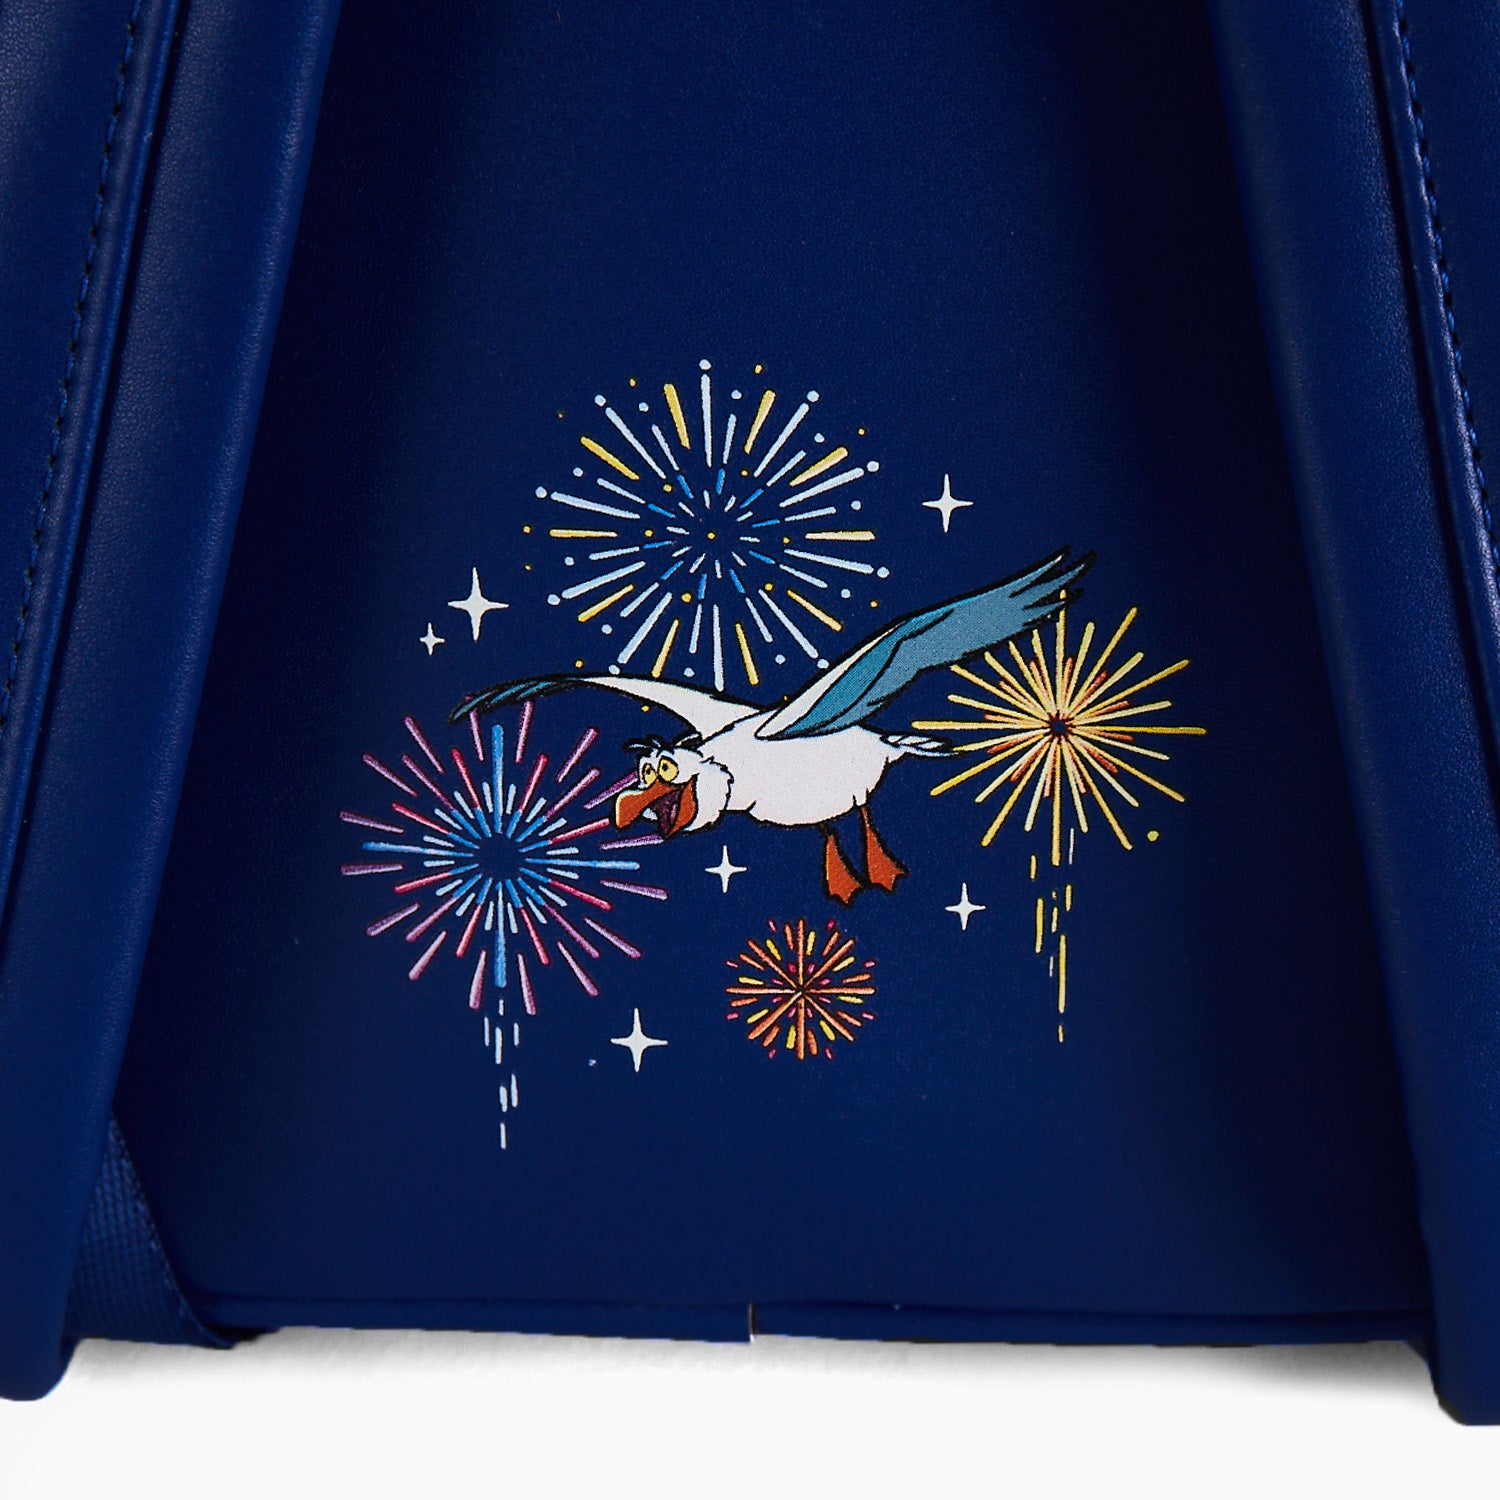 Disney | The Little Mermaid Ariel Fireworks Mini Backpack